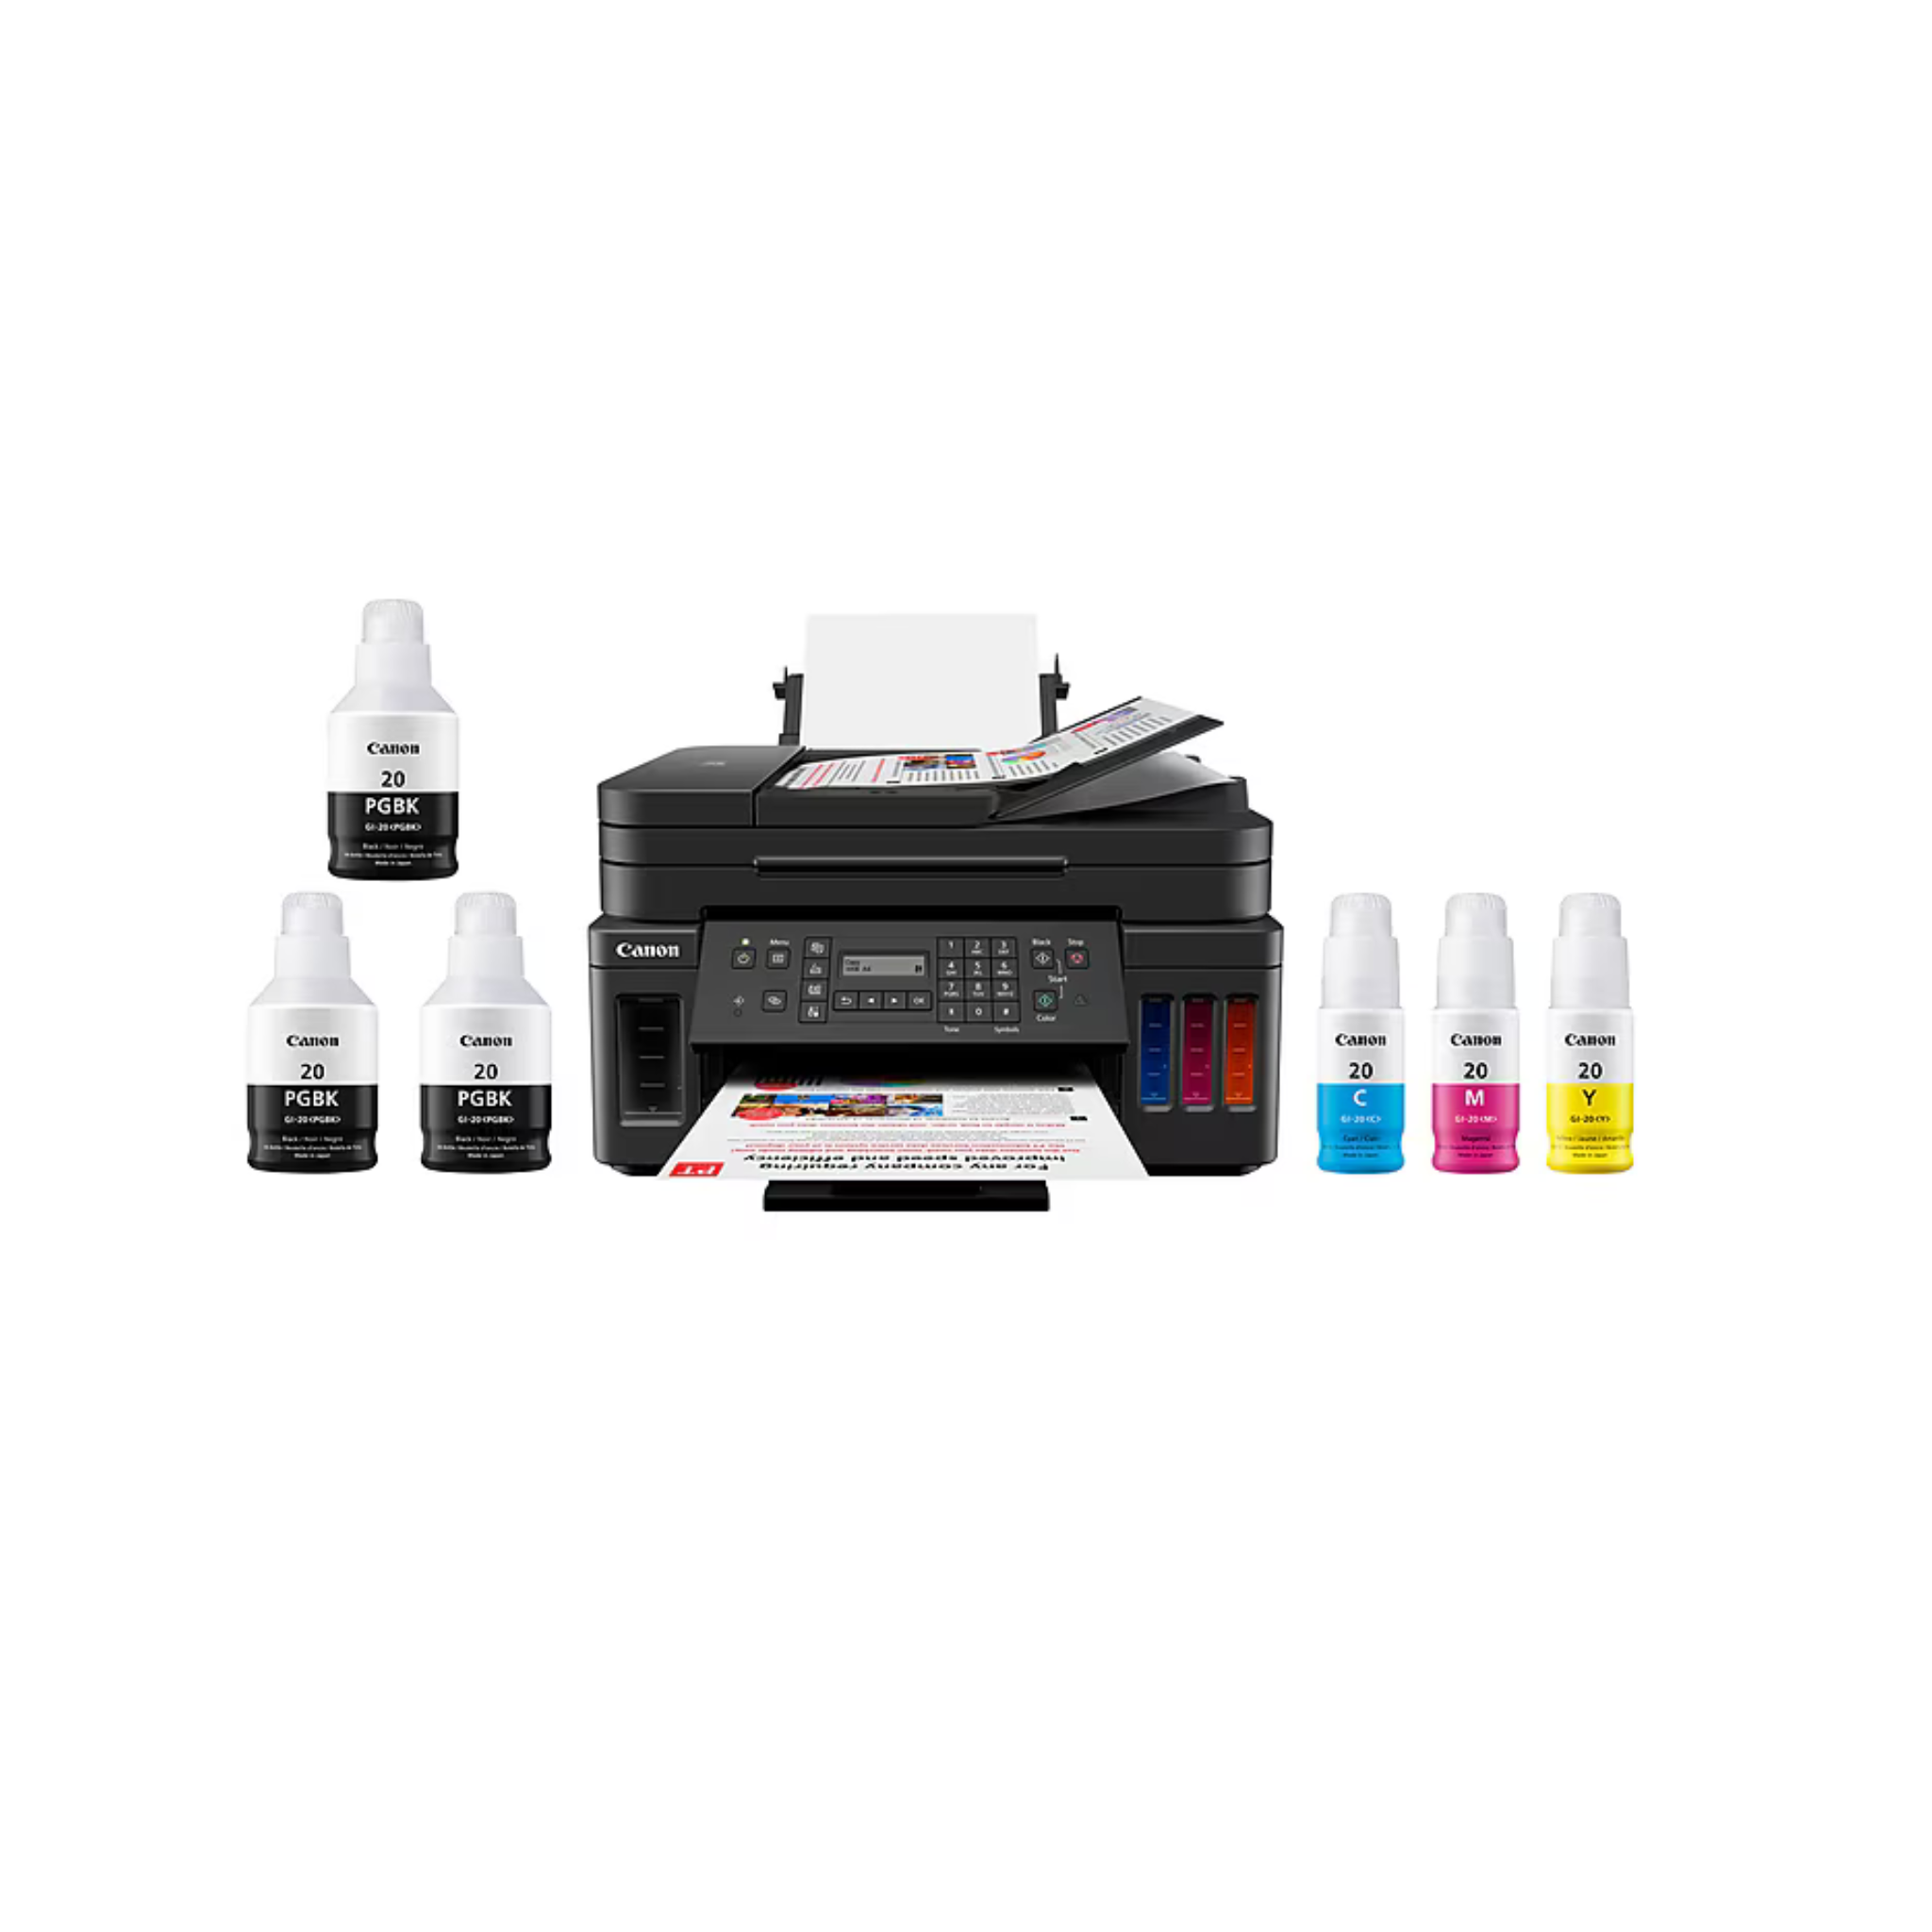 Canon PIXMA G7020 MegaTank Wireless Color Inkjet Printer + $77.50 Staples Rewards